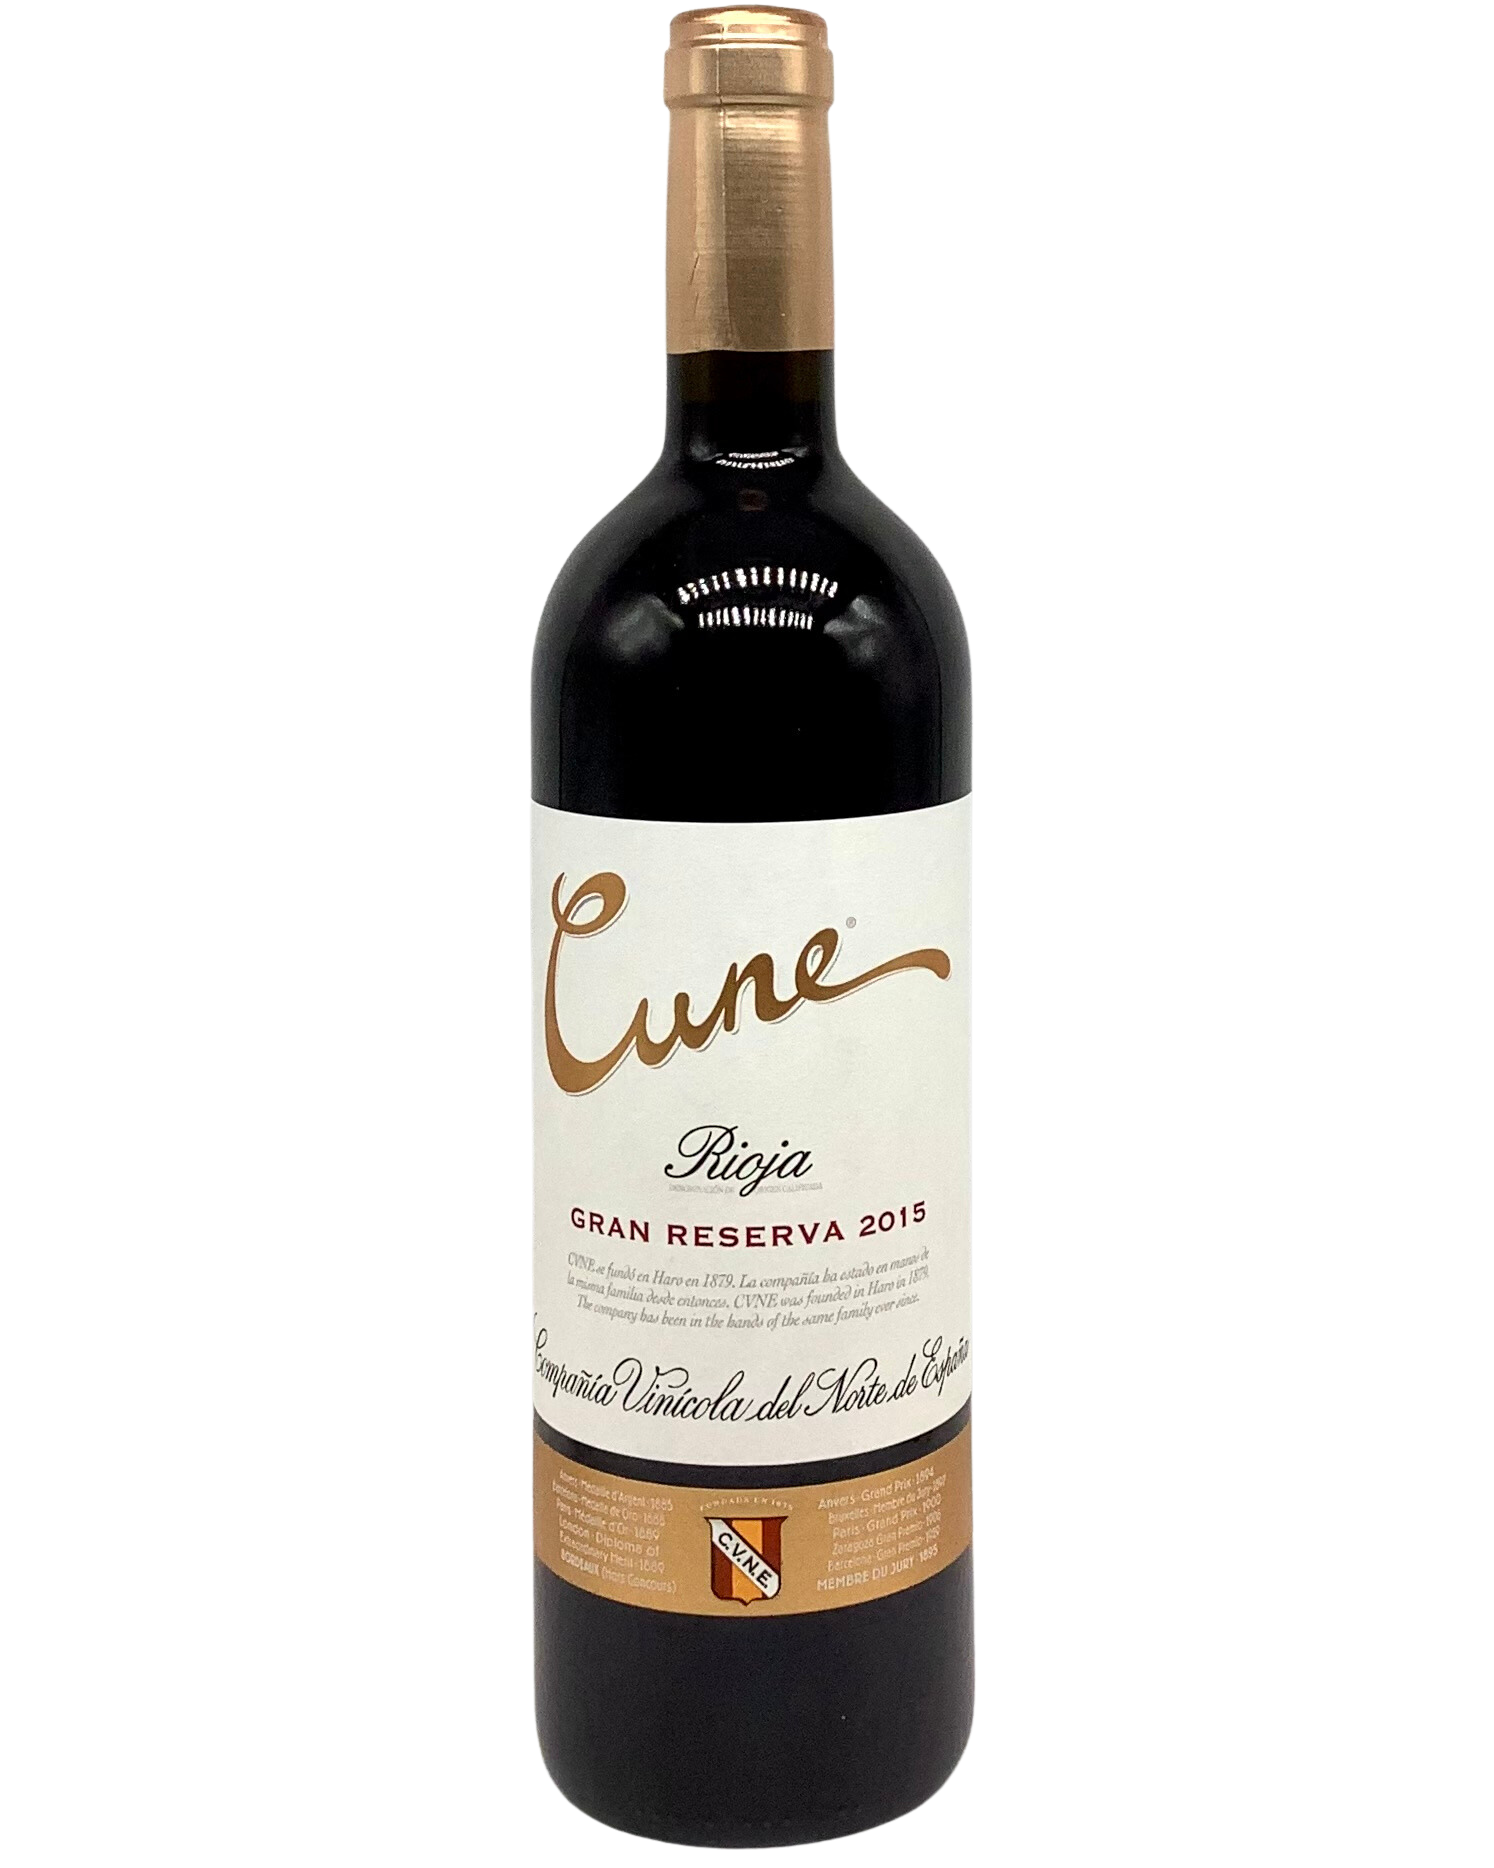 CVNE, Tempranillo "Cune Gran Reserva" Rioja, Spain 2017